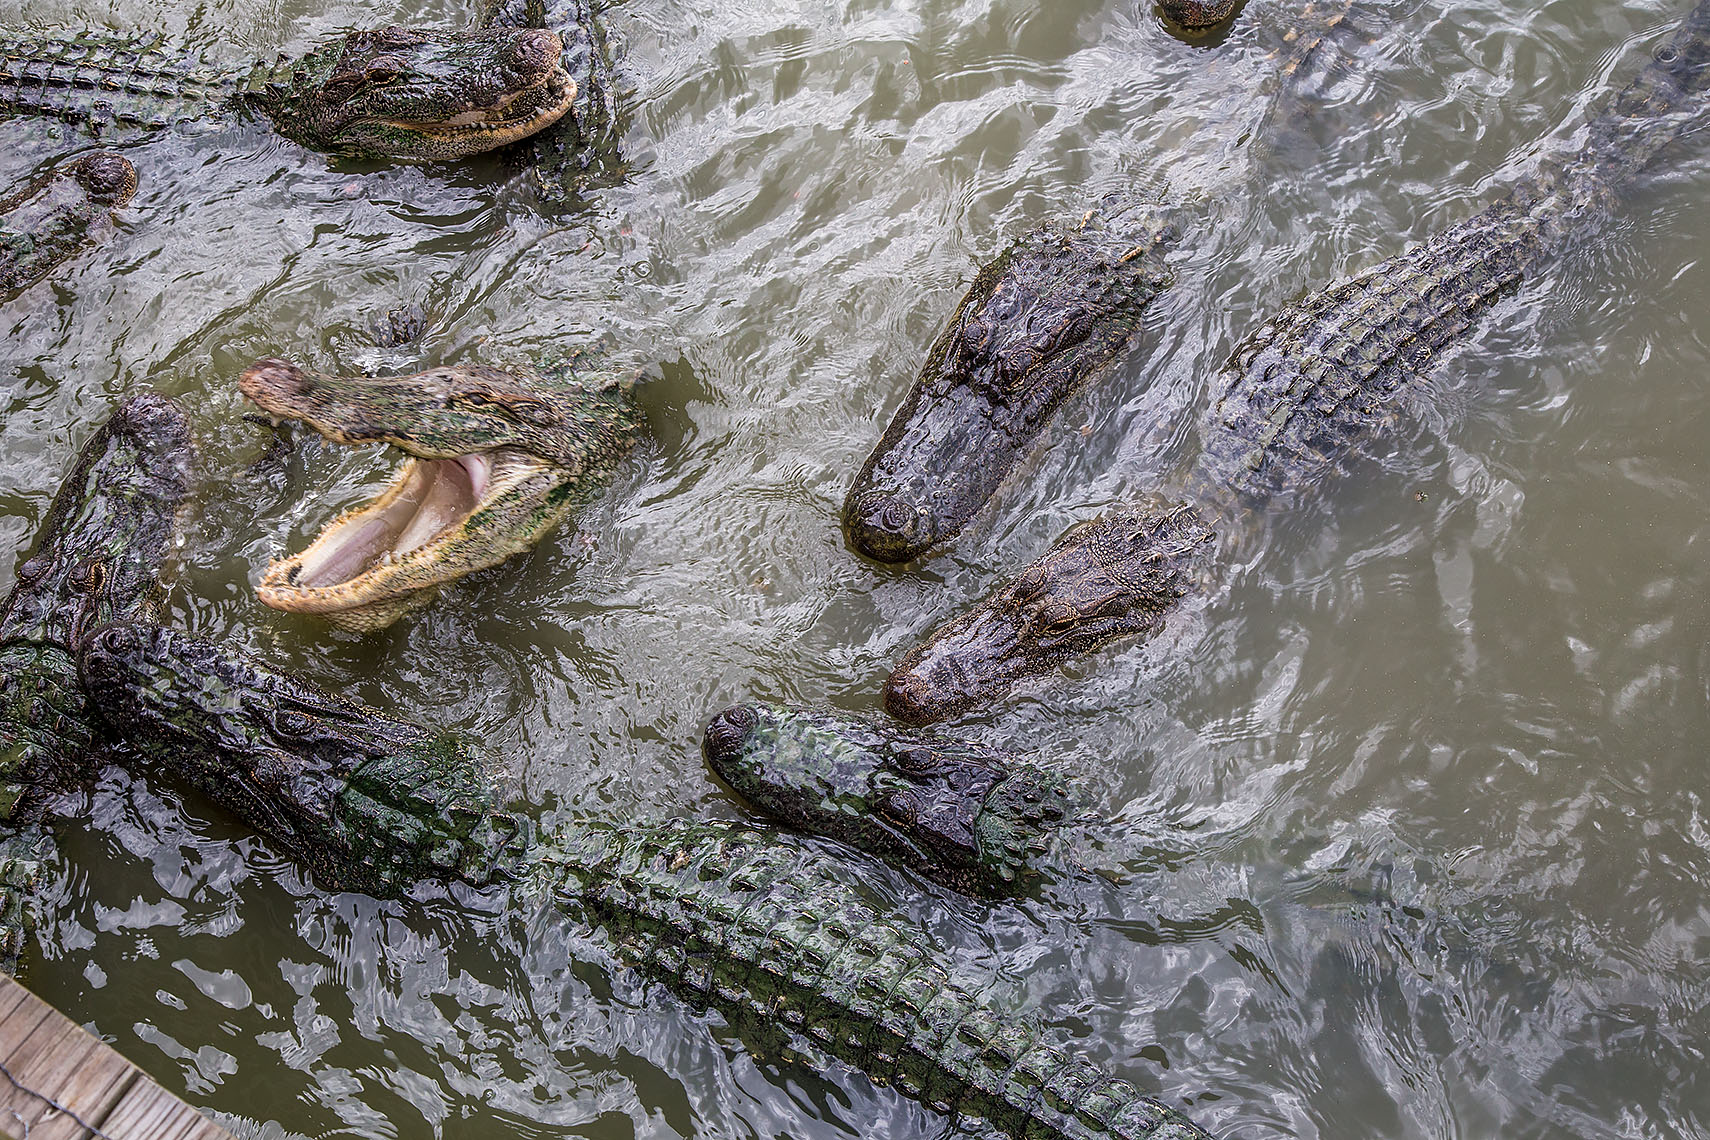 1036American Alligators, Alligator mississippiensis, Gator Country ,Beaumont, Texas 